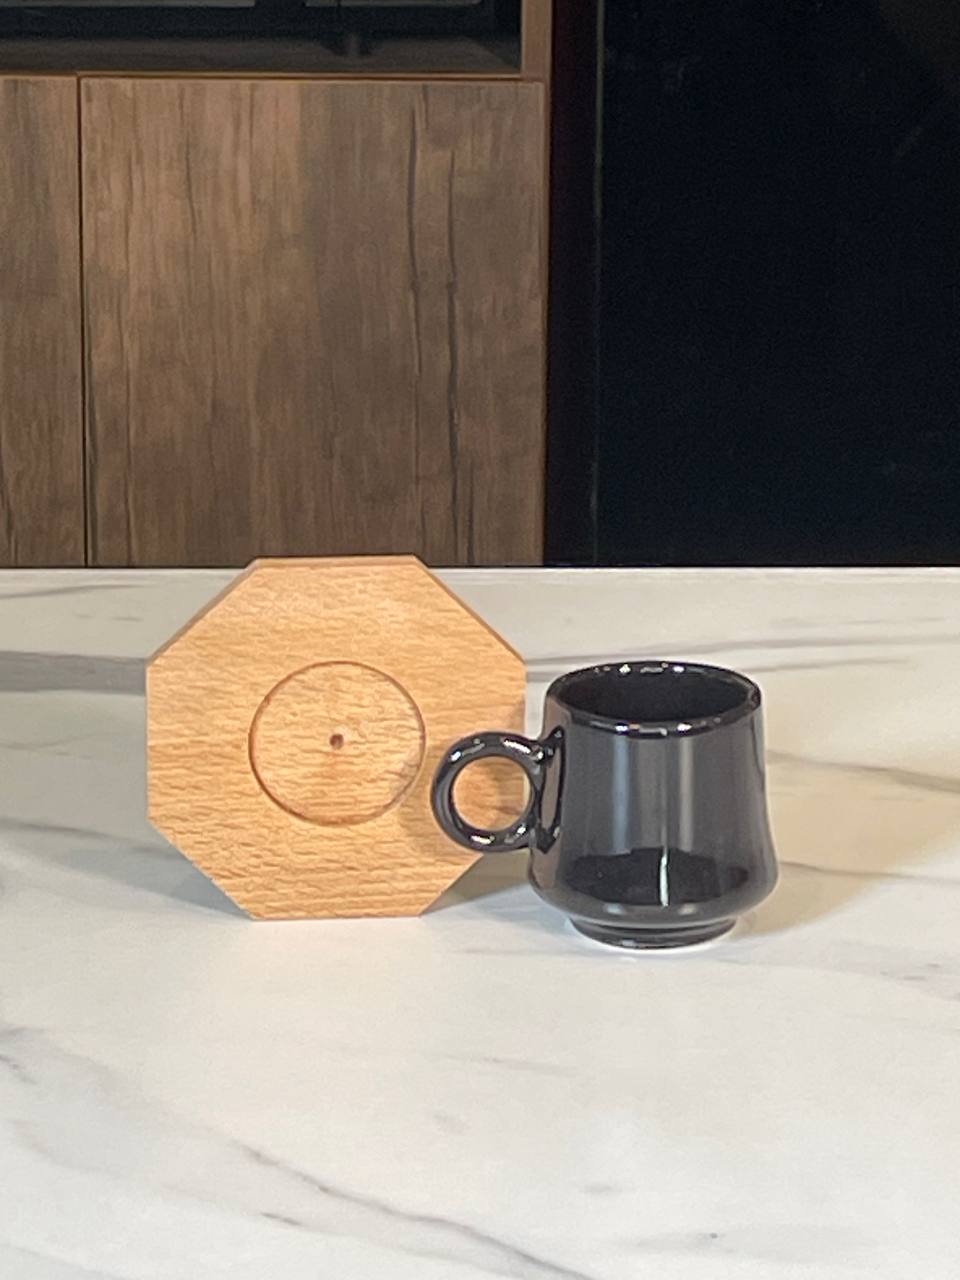 Ceramic Egg Coffee Cups 12 Pcs Set - Black + Wood Coasters